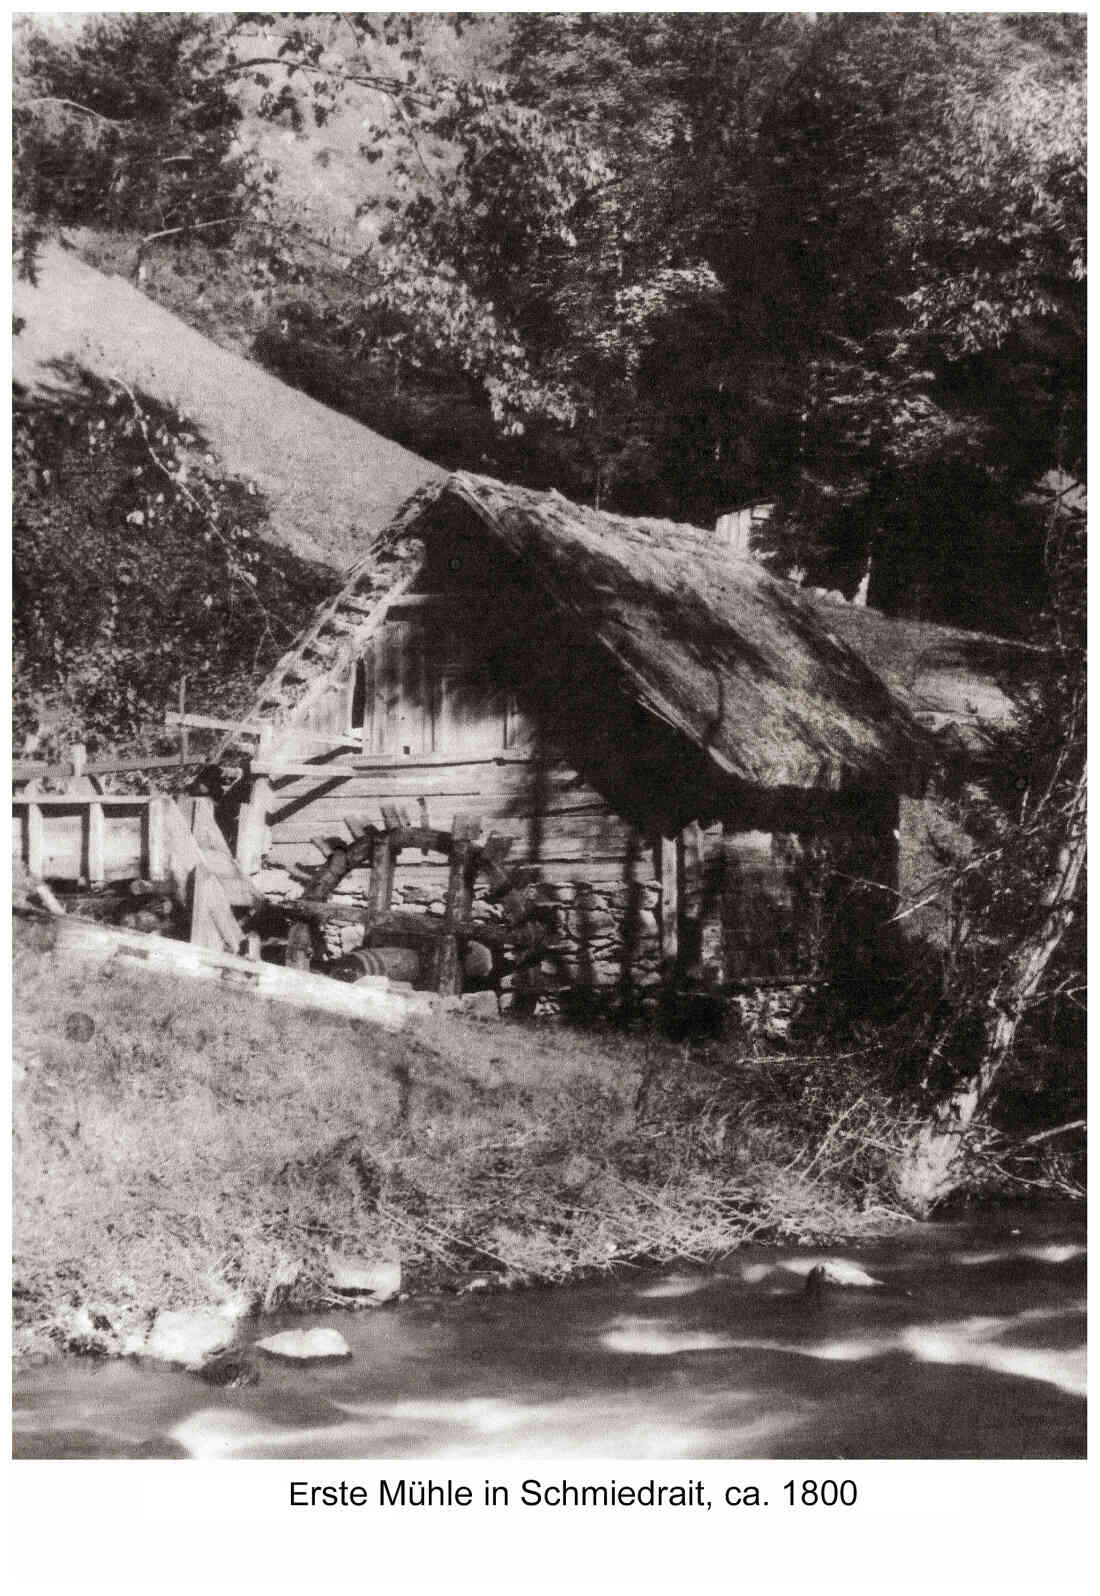 Erste Mühle in Schmiedrait, ca. 1800